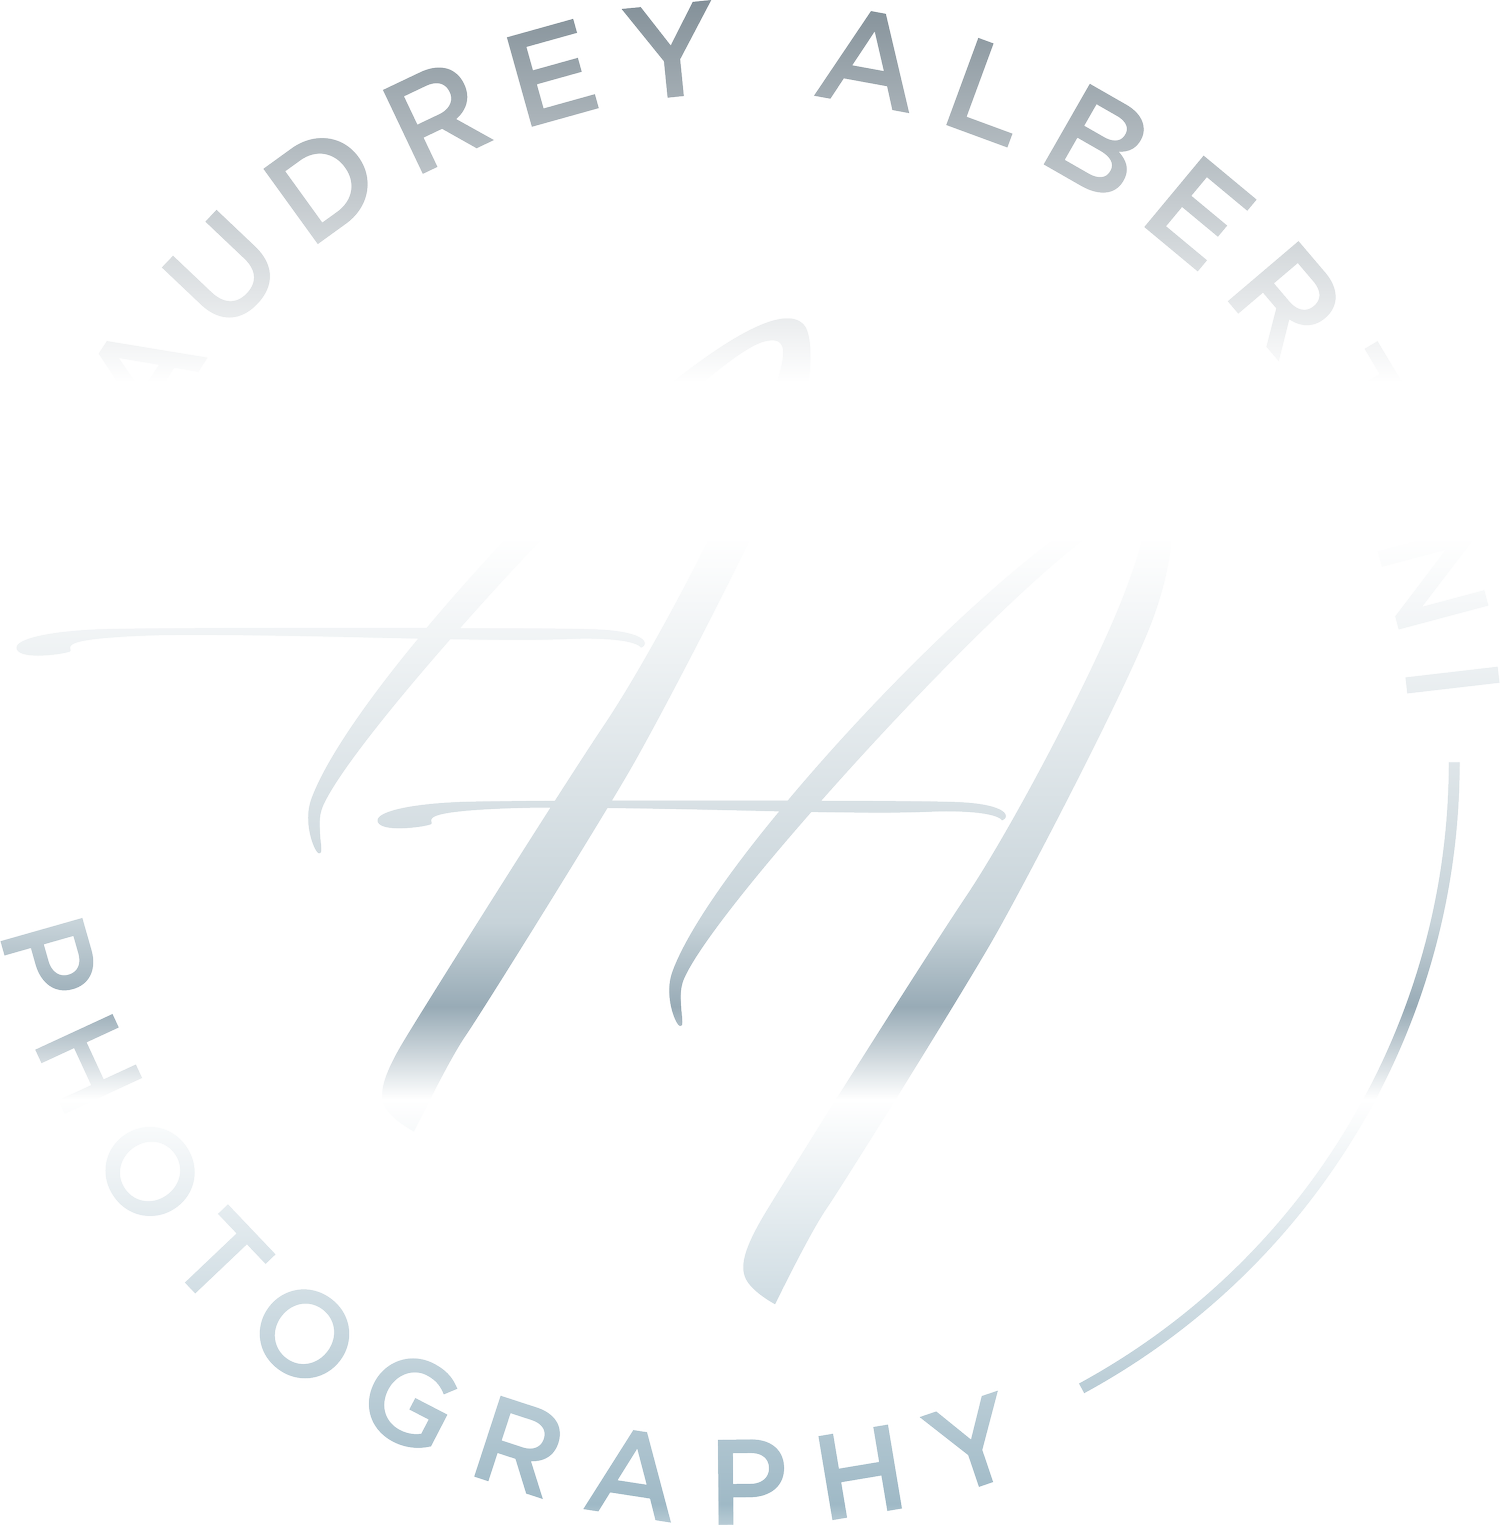 AUDREY ALBERTINI PHOTOGRAPHY